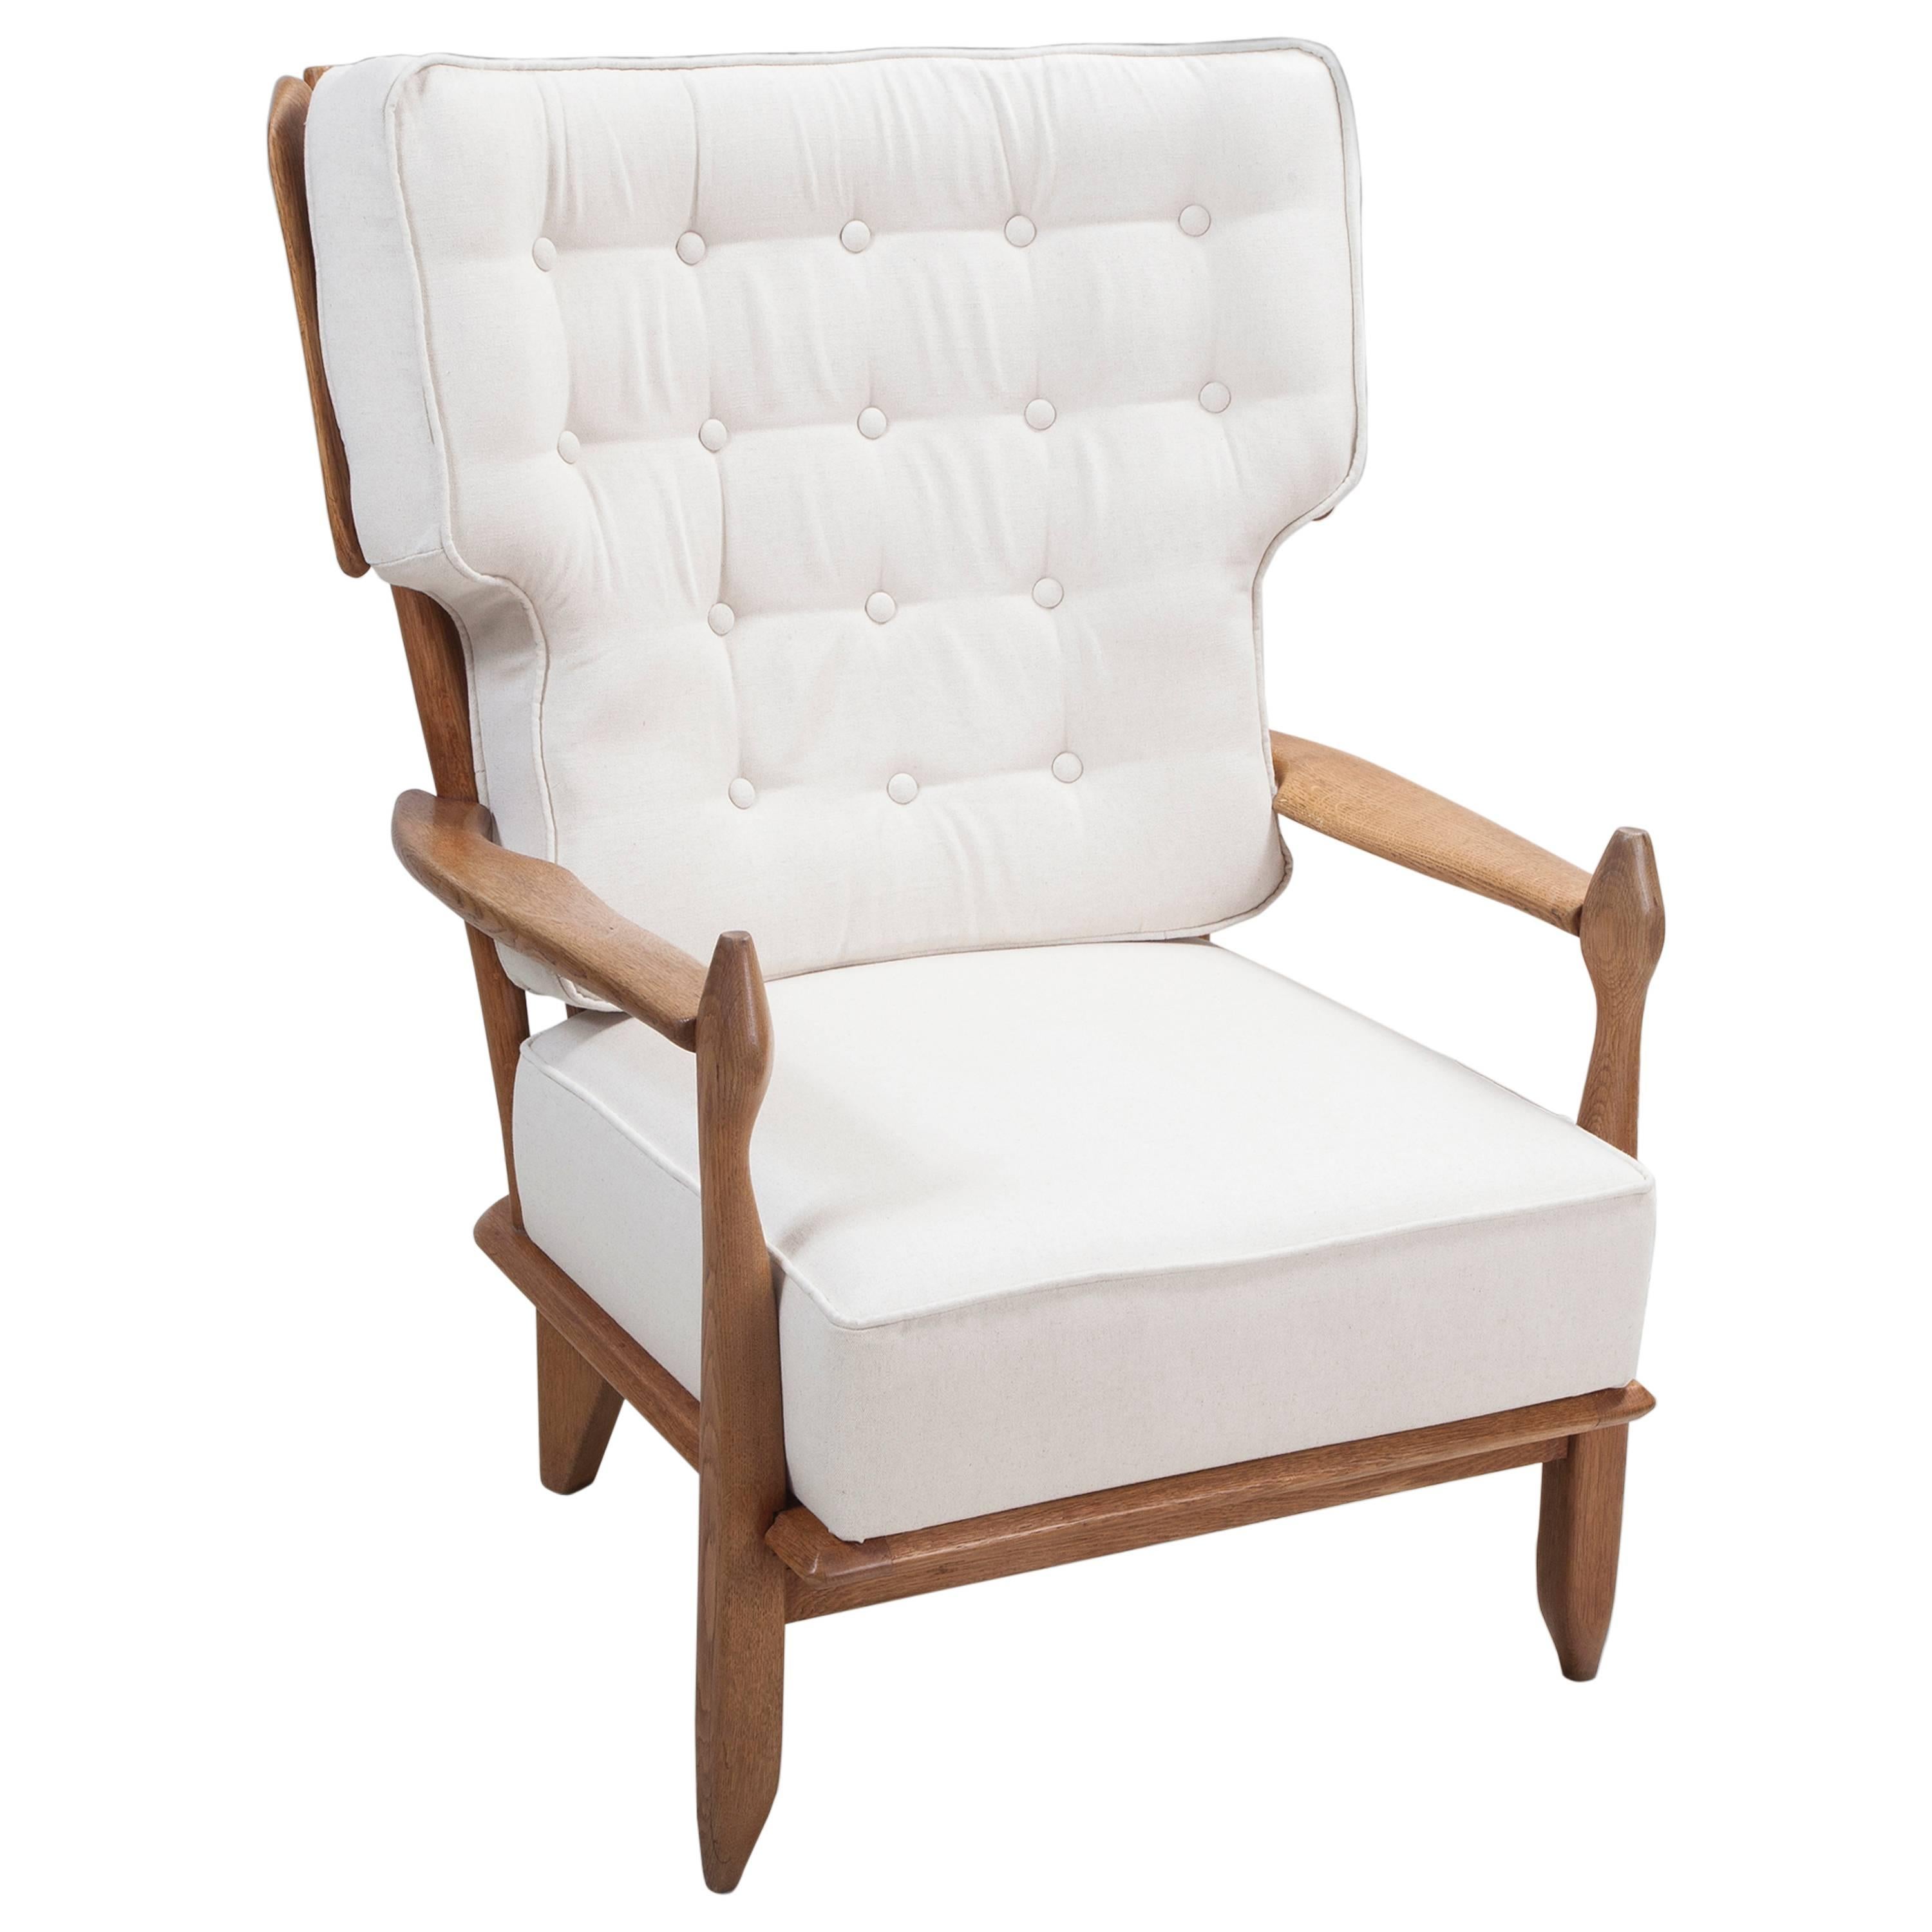 Guillerme et Chambron High Back Chair in Solid Oak, ''Votre Maison'' Edition For Sale